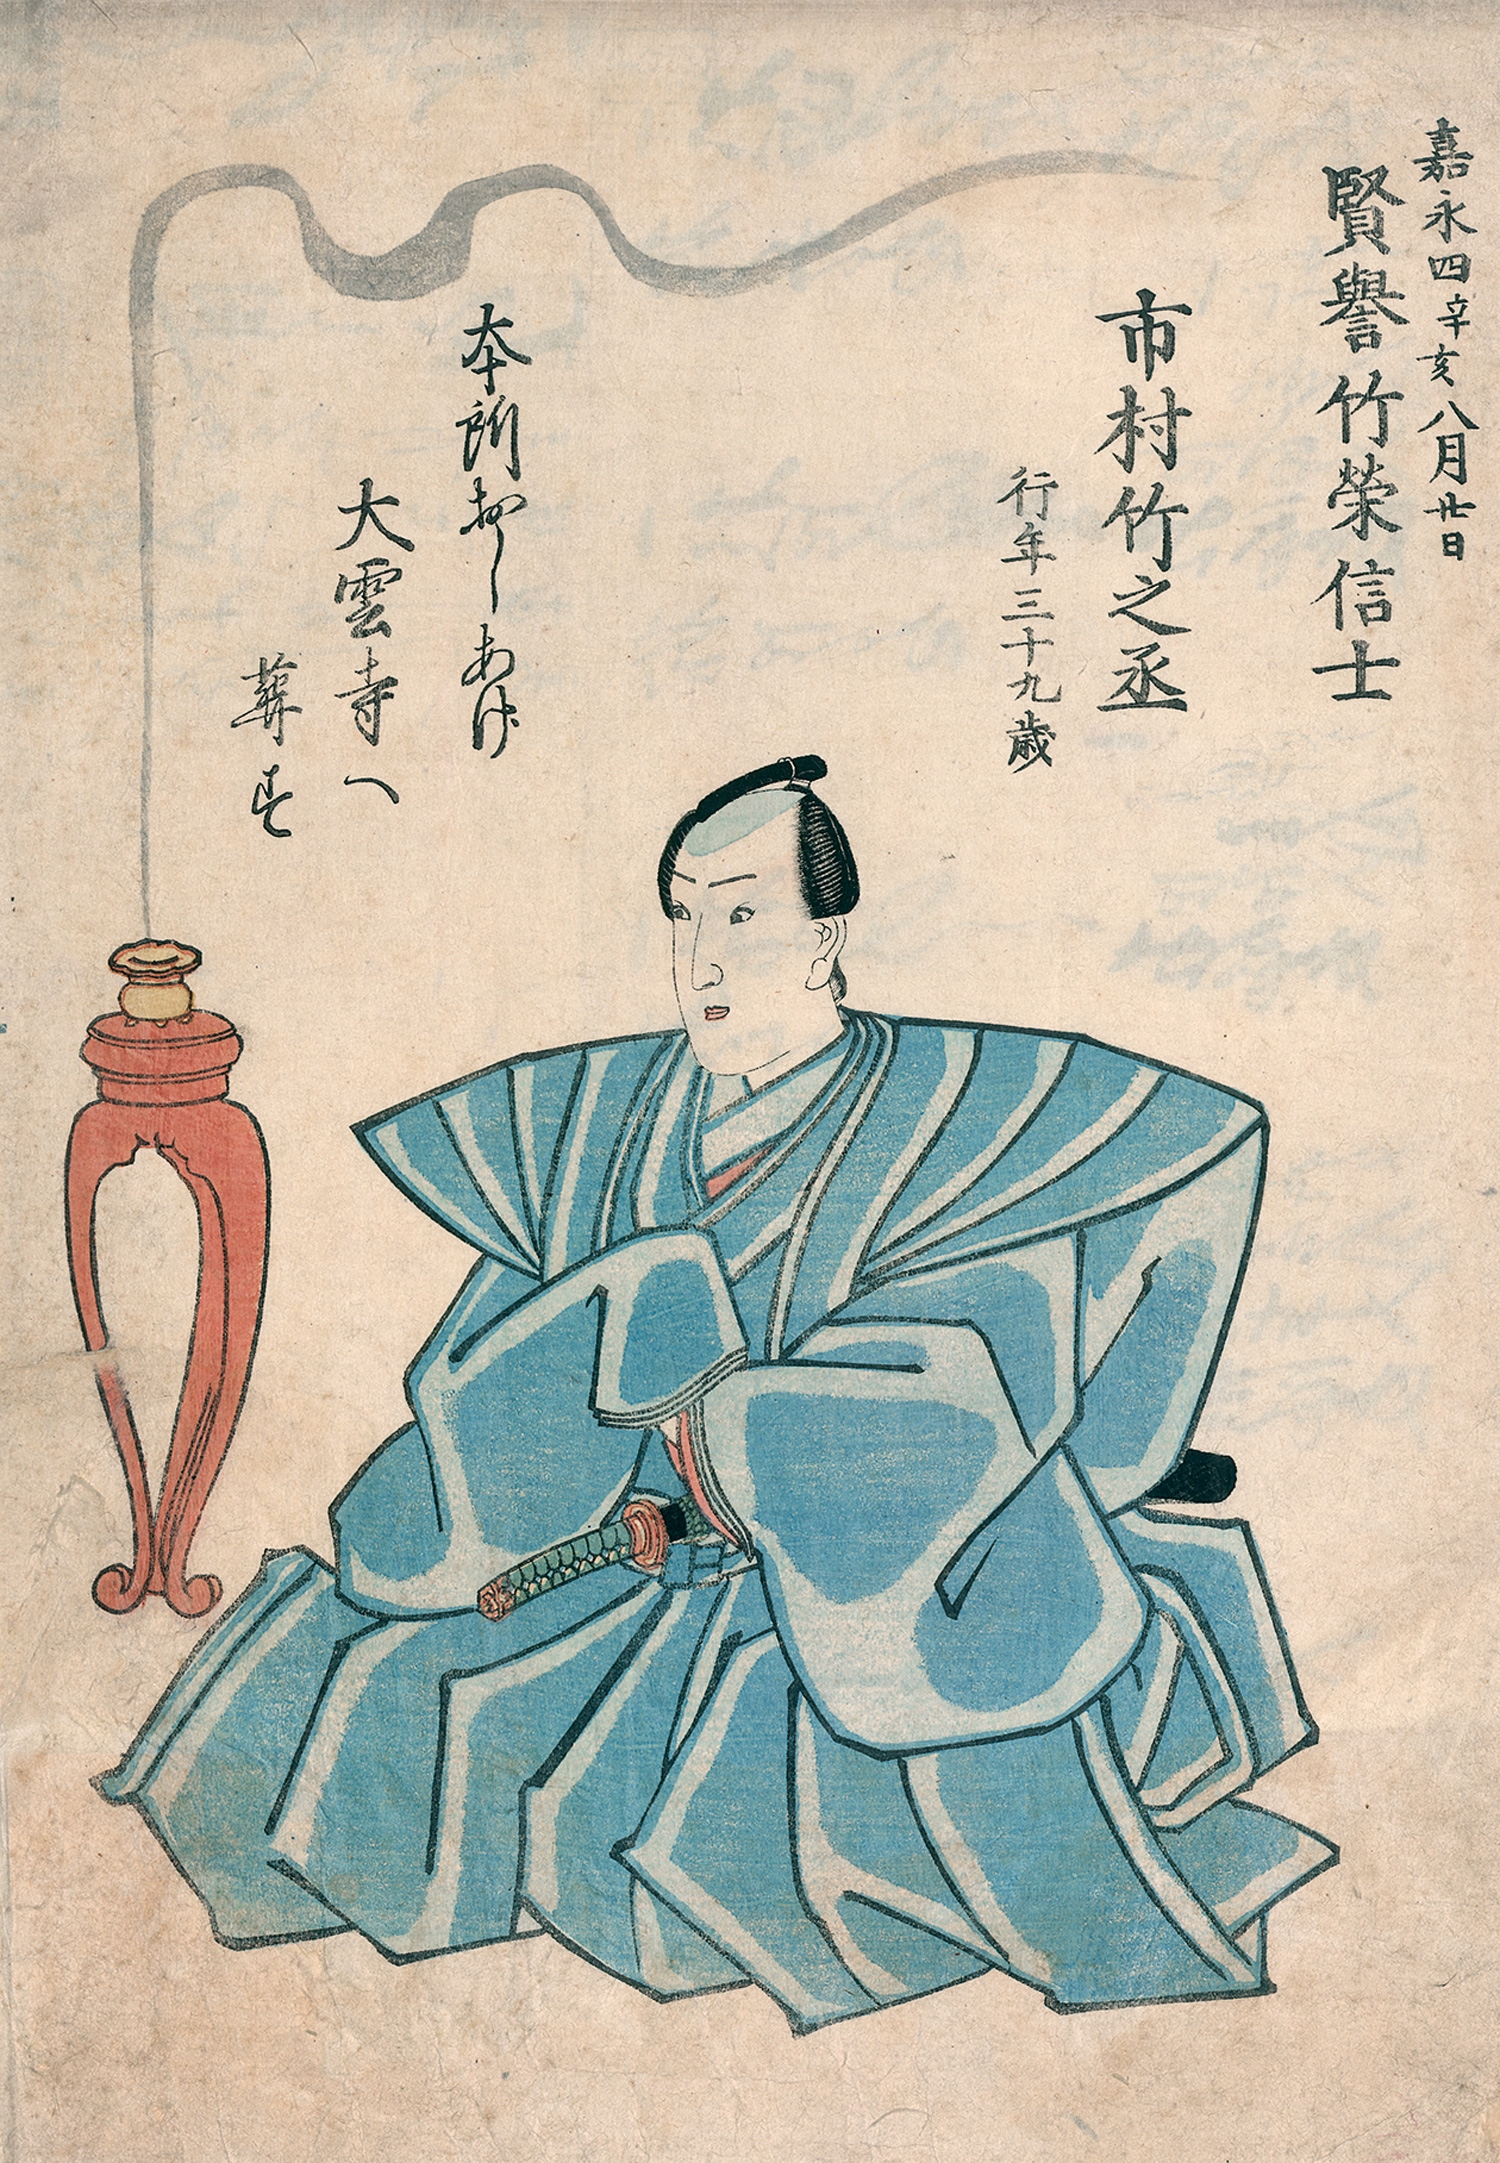 Takenojo Ichimura im Tempel by Utagawa Toyokuni, um 1820